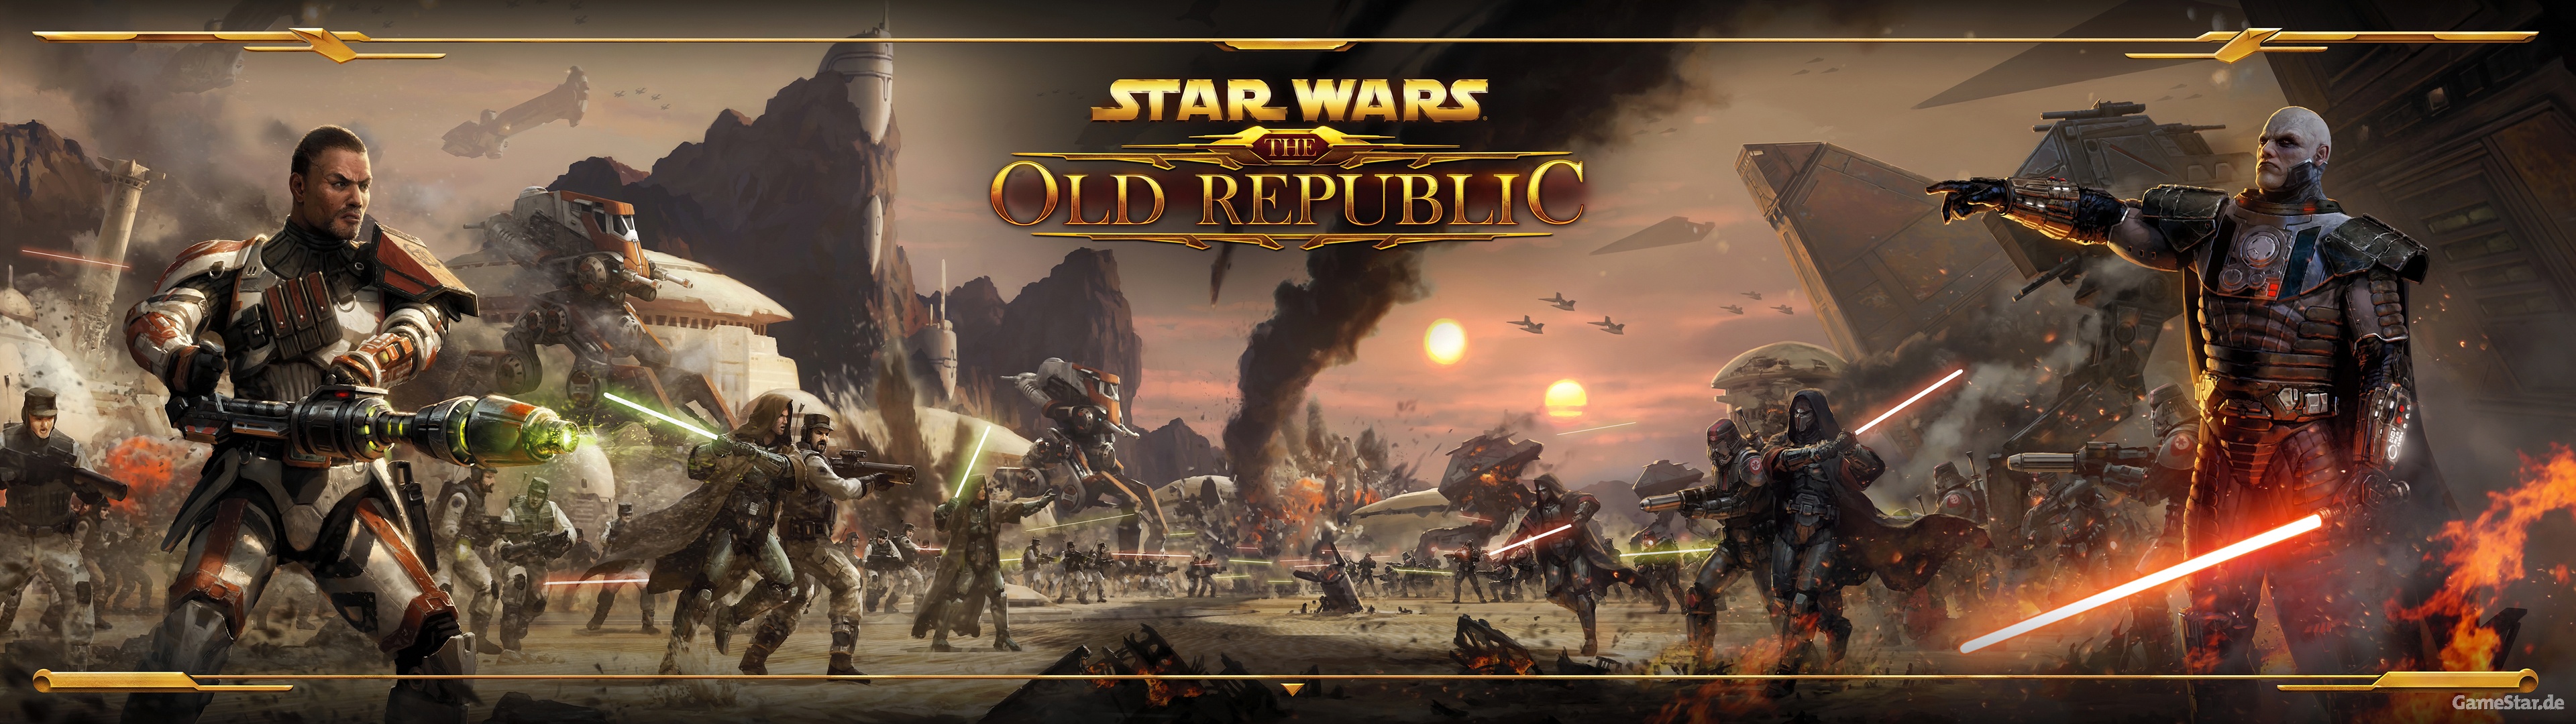    Star Wars The Old Republic   Dualscreen Wallpaper   GameStarde 3840x1080